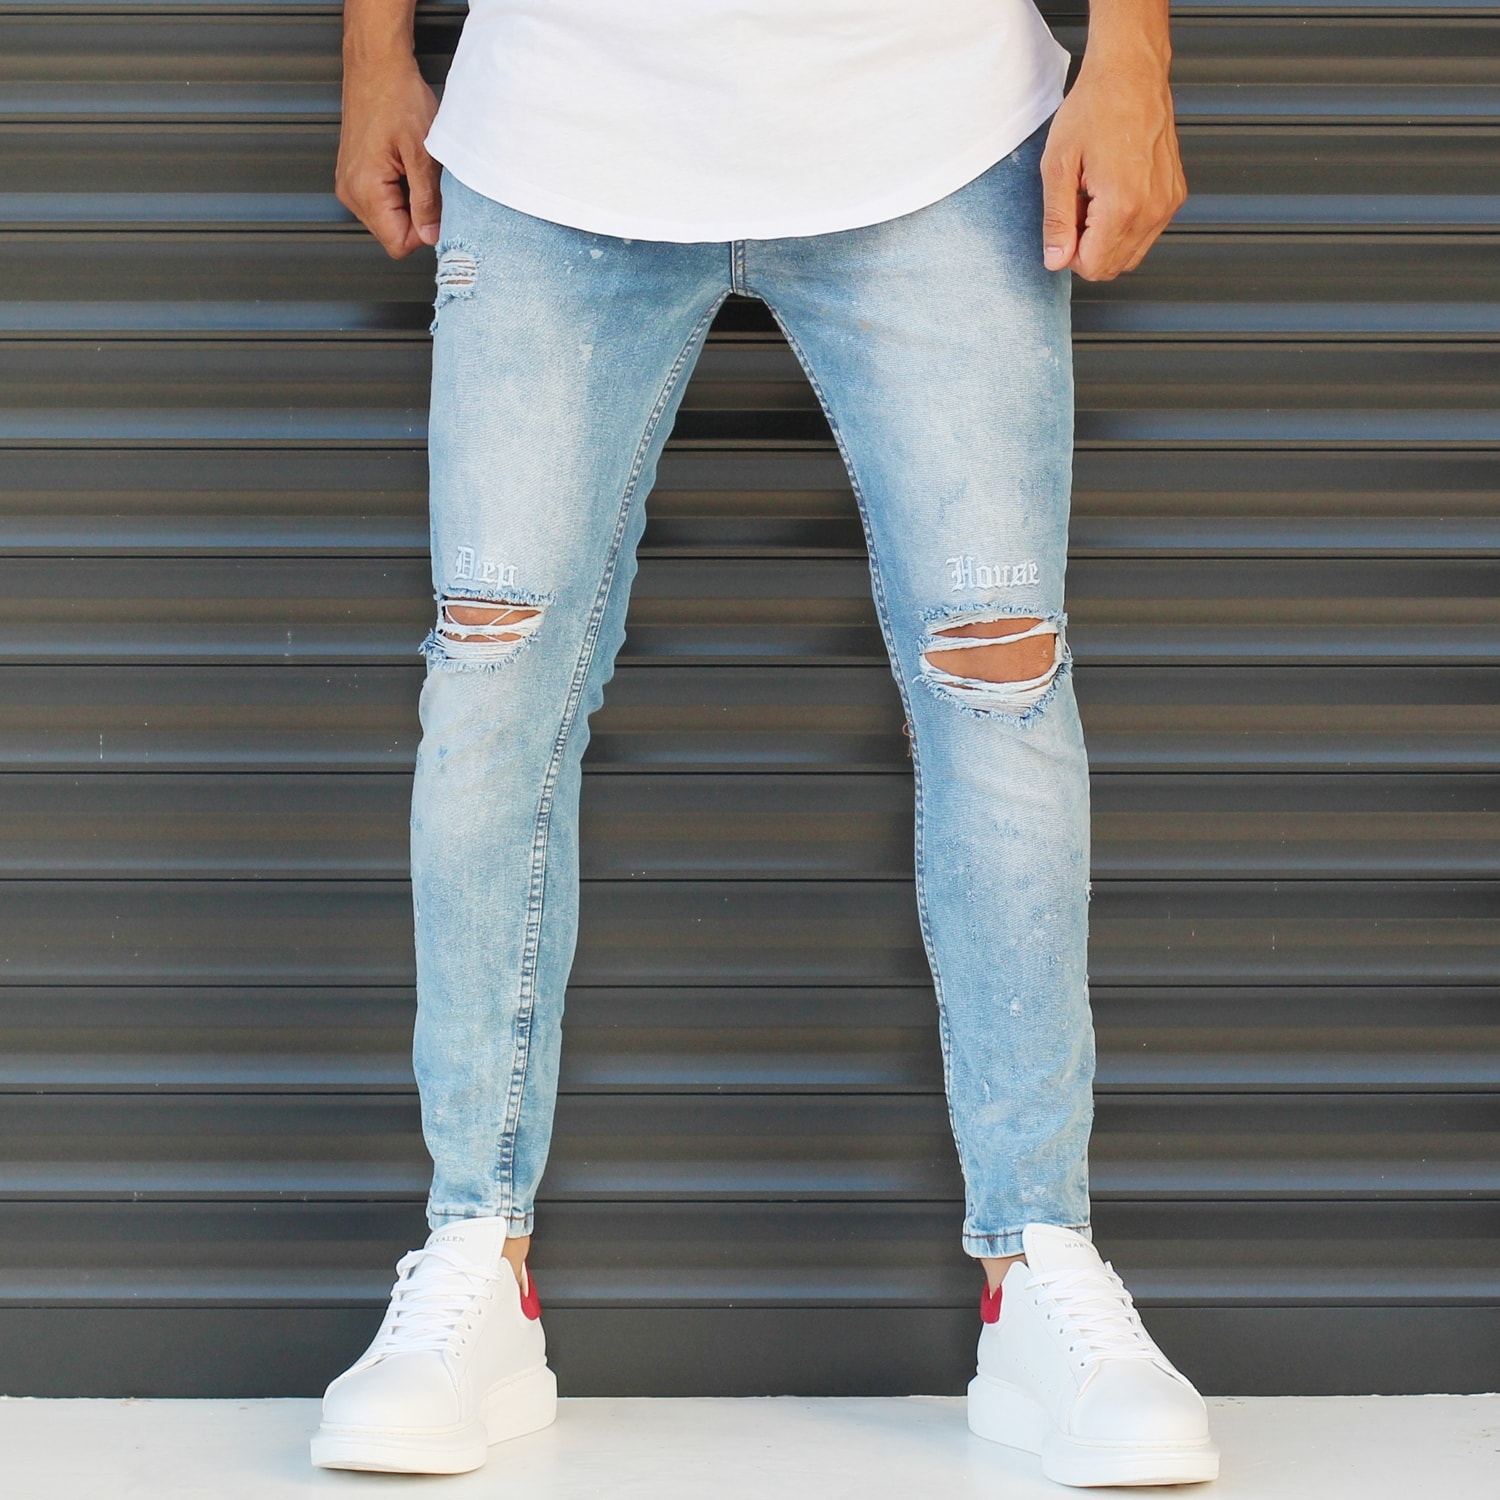 Men's Basic Narrow Leg Sport Jeans With Knee Rips Blue